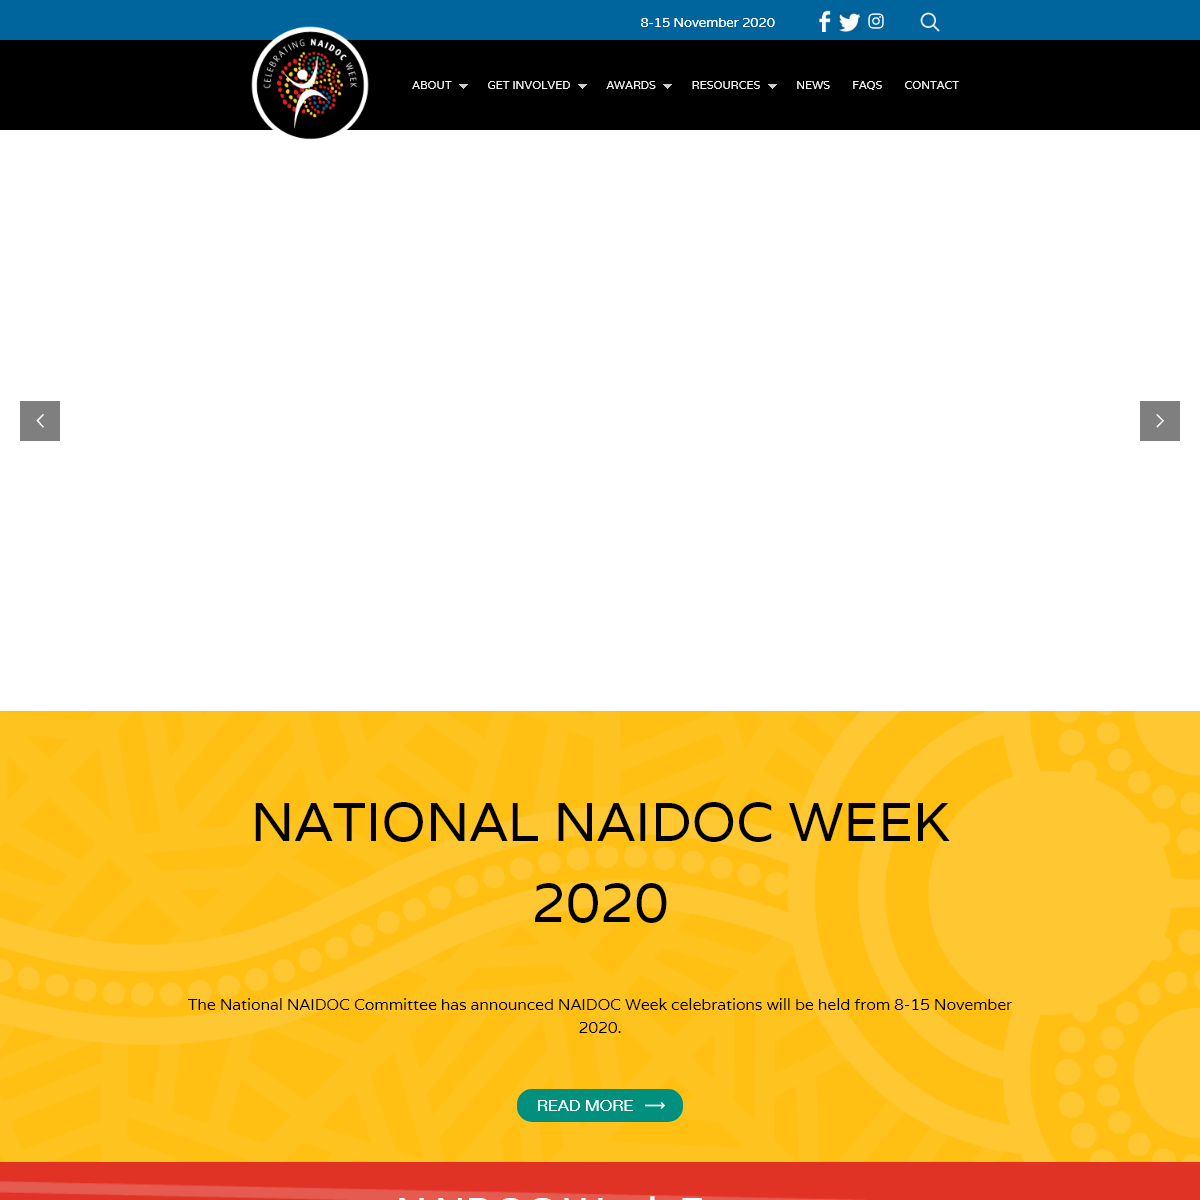 A complete backup of naidoc.org.au